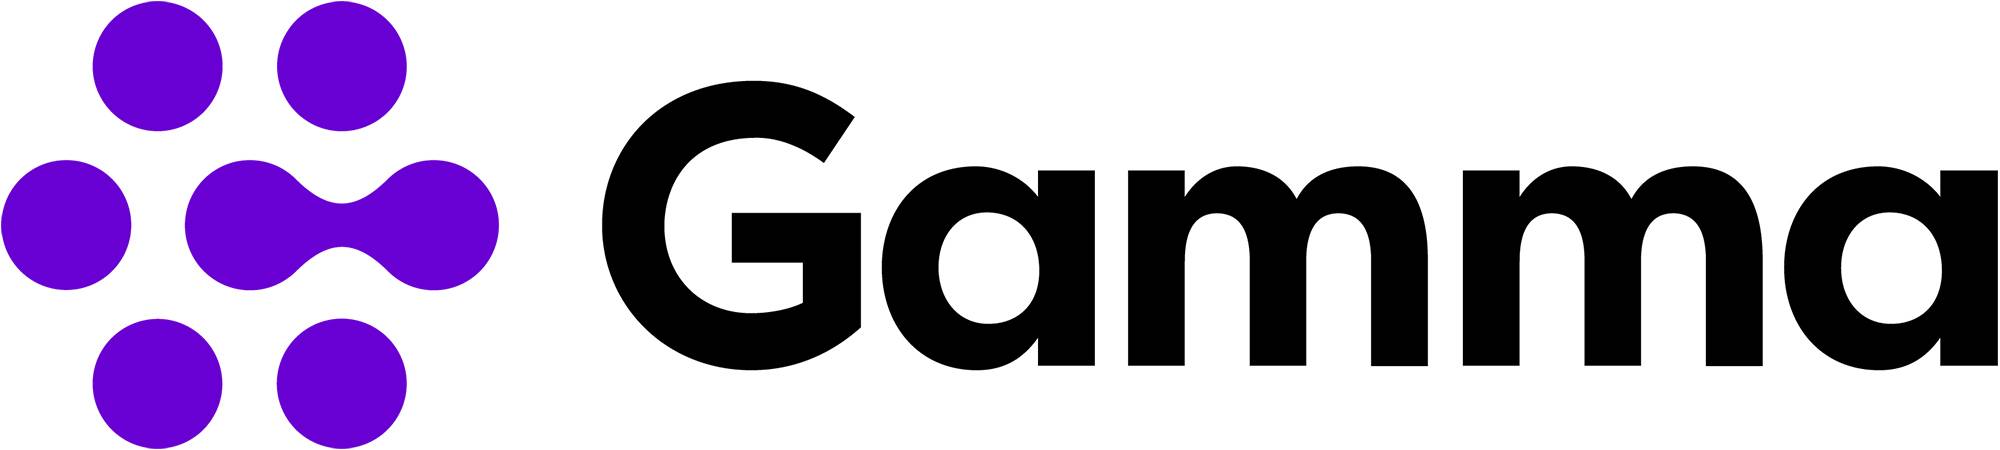 Gamma Logo Black Purple - JPG